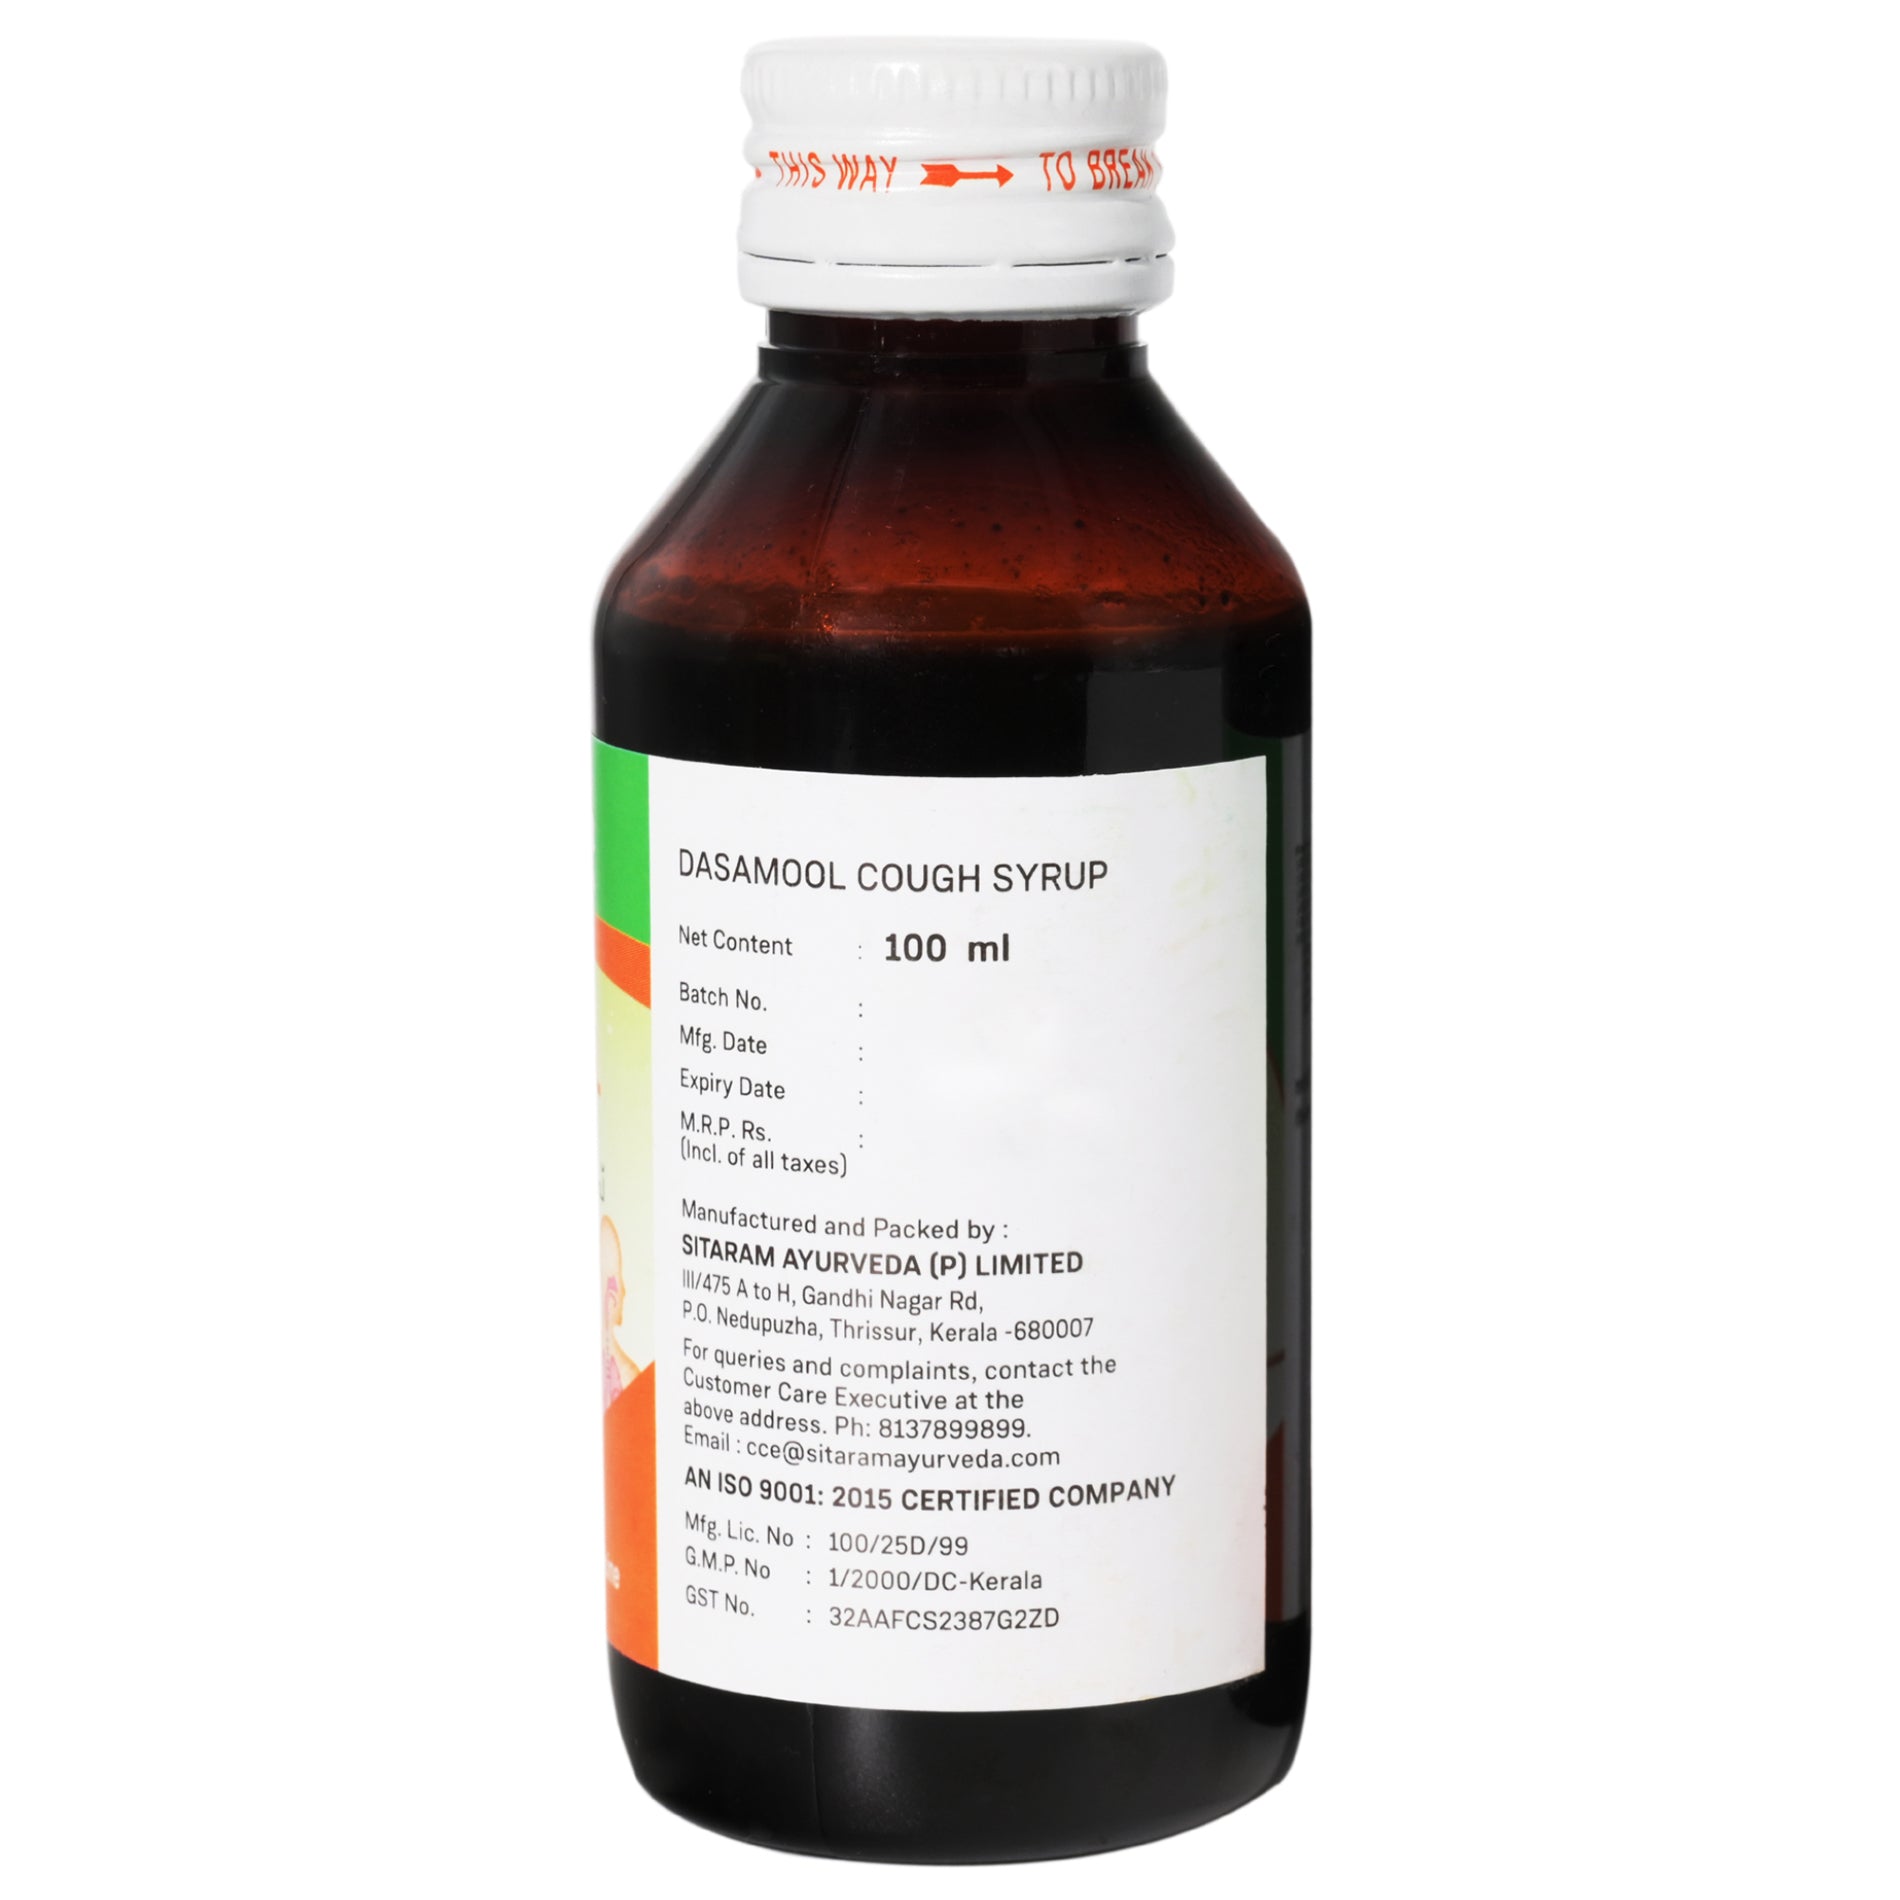 Sitaram Ayurveda Dasamool Cough Syrup 100Ml - Pack of 2  (Prescription Medication)